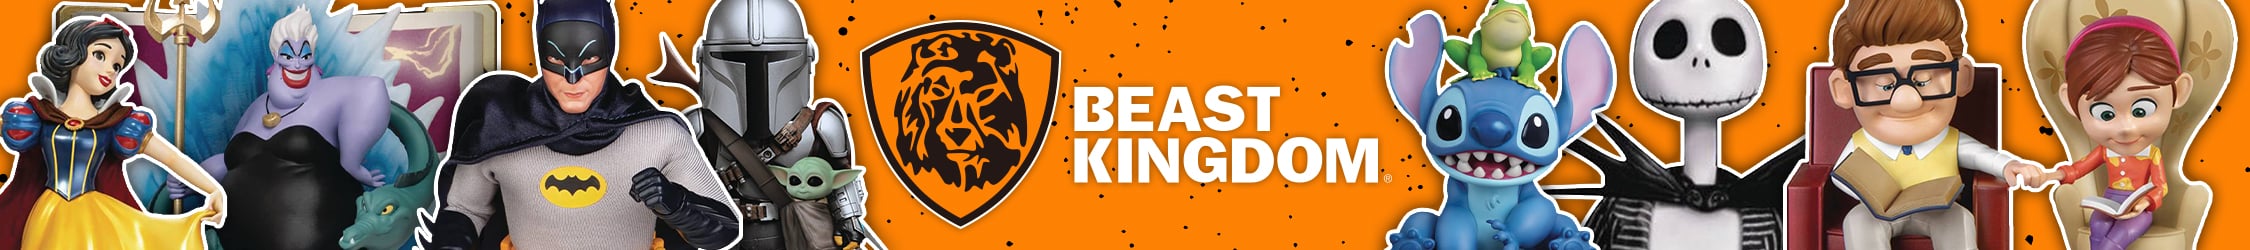 BeastKingdom